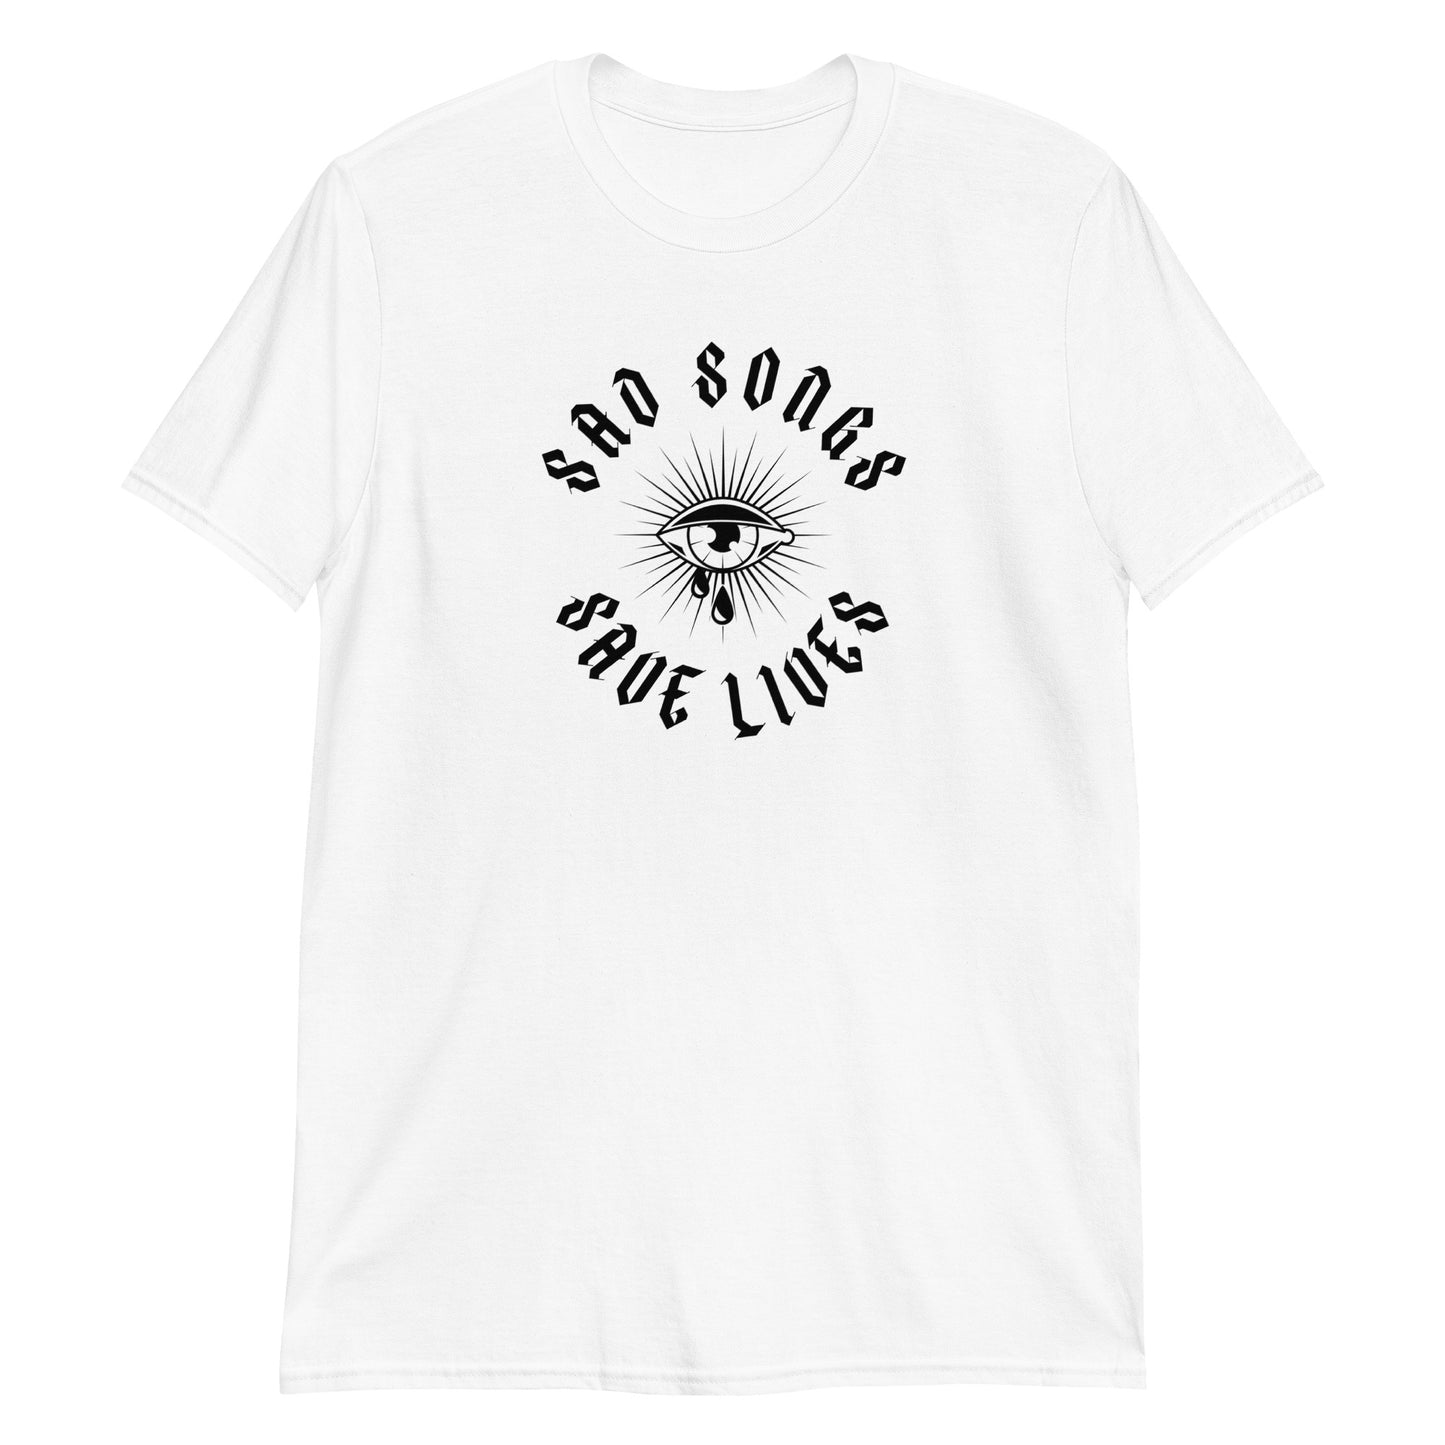 "Sad Songs Save Lives" Short-Sleeve Unisex T-Shirt